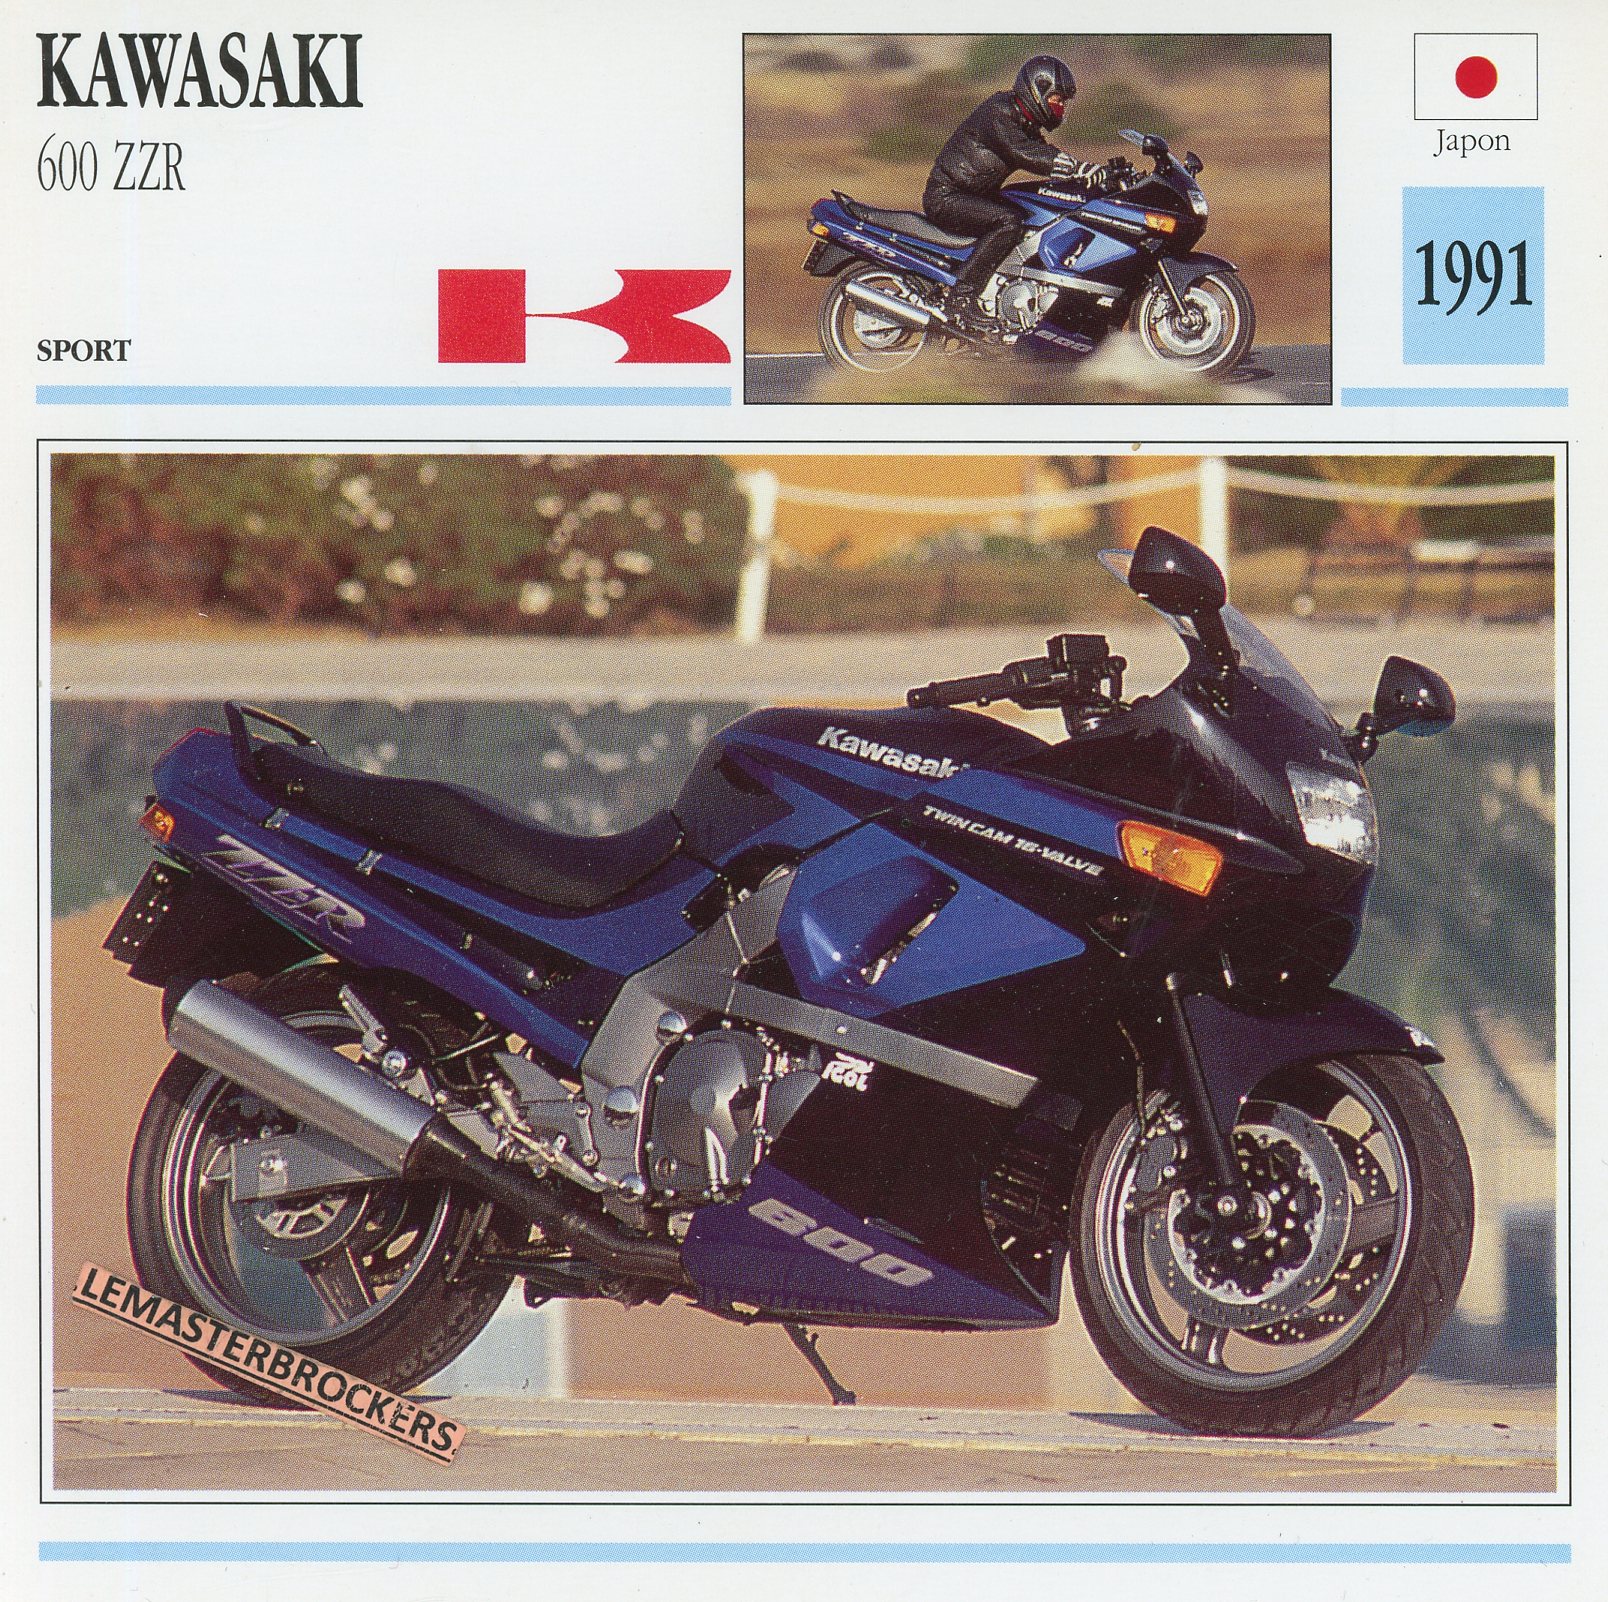 KAWASAKI-ZZR-600-1991-FICHE-MOTO-KAWASAKI-ZZR600-LEMASTERBROCKERS